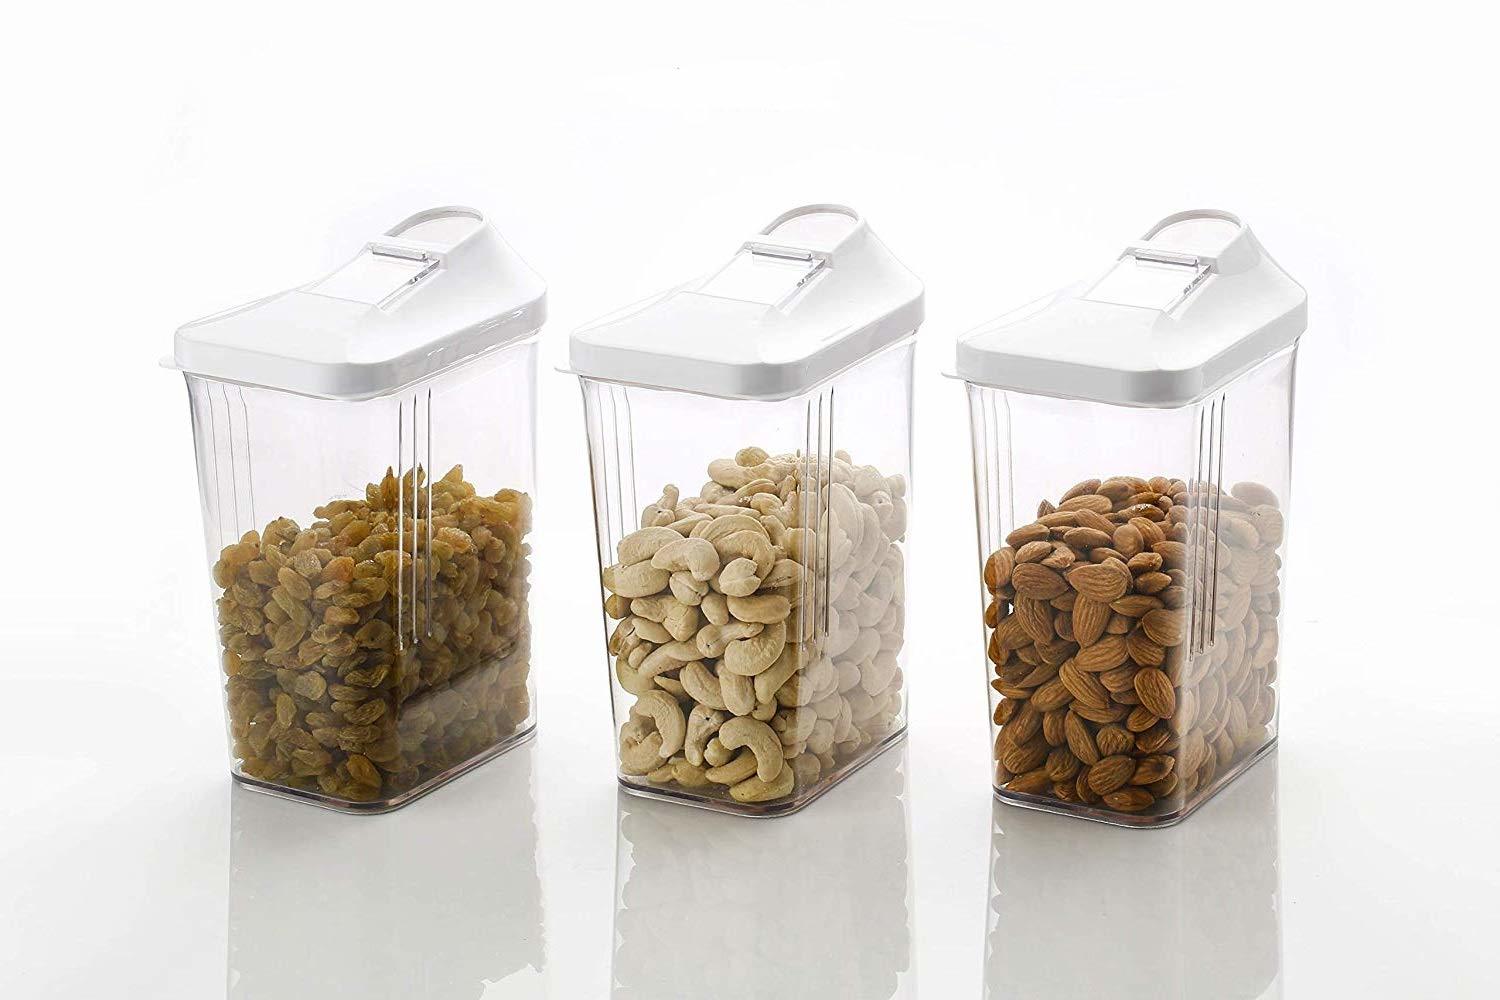 1100 ml Easy Flow Plastic Kitchen Storage Jars & Container Set, Transparent Set of 6